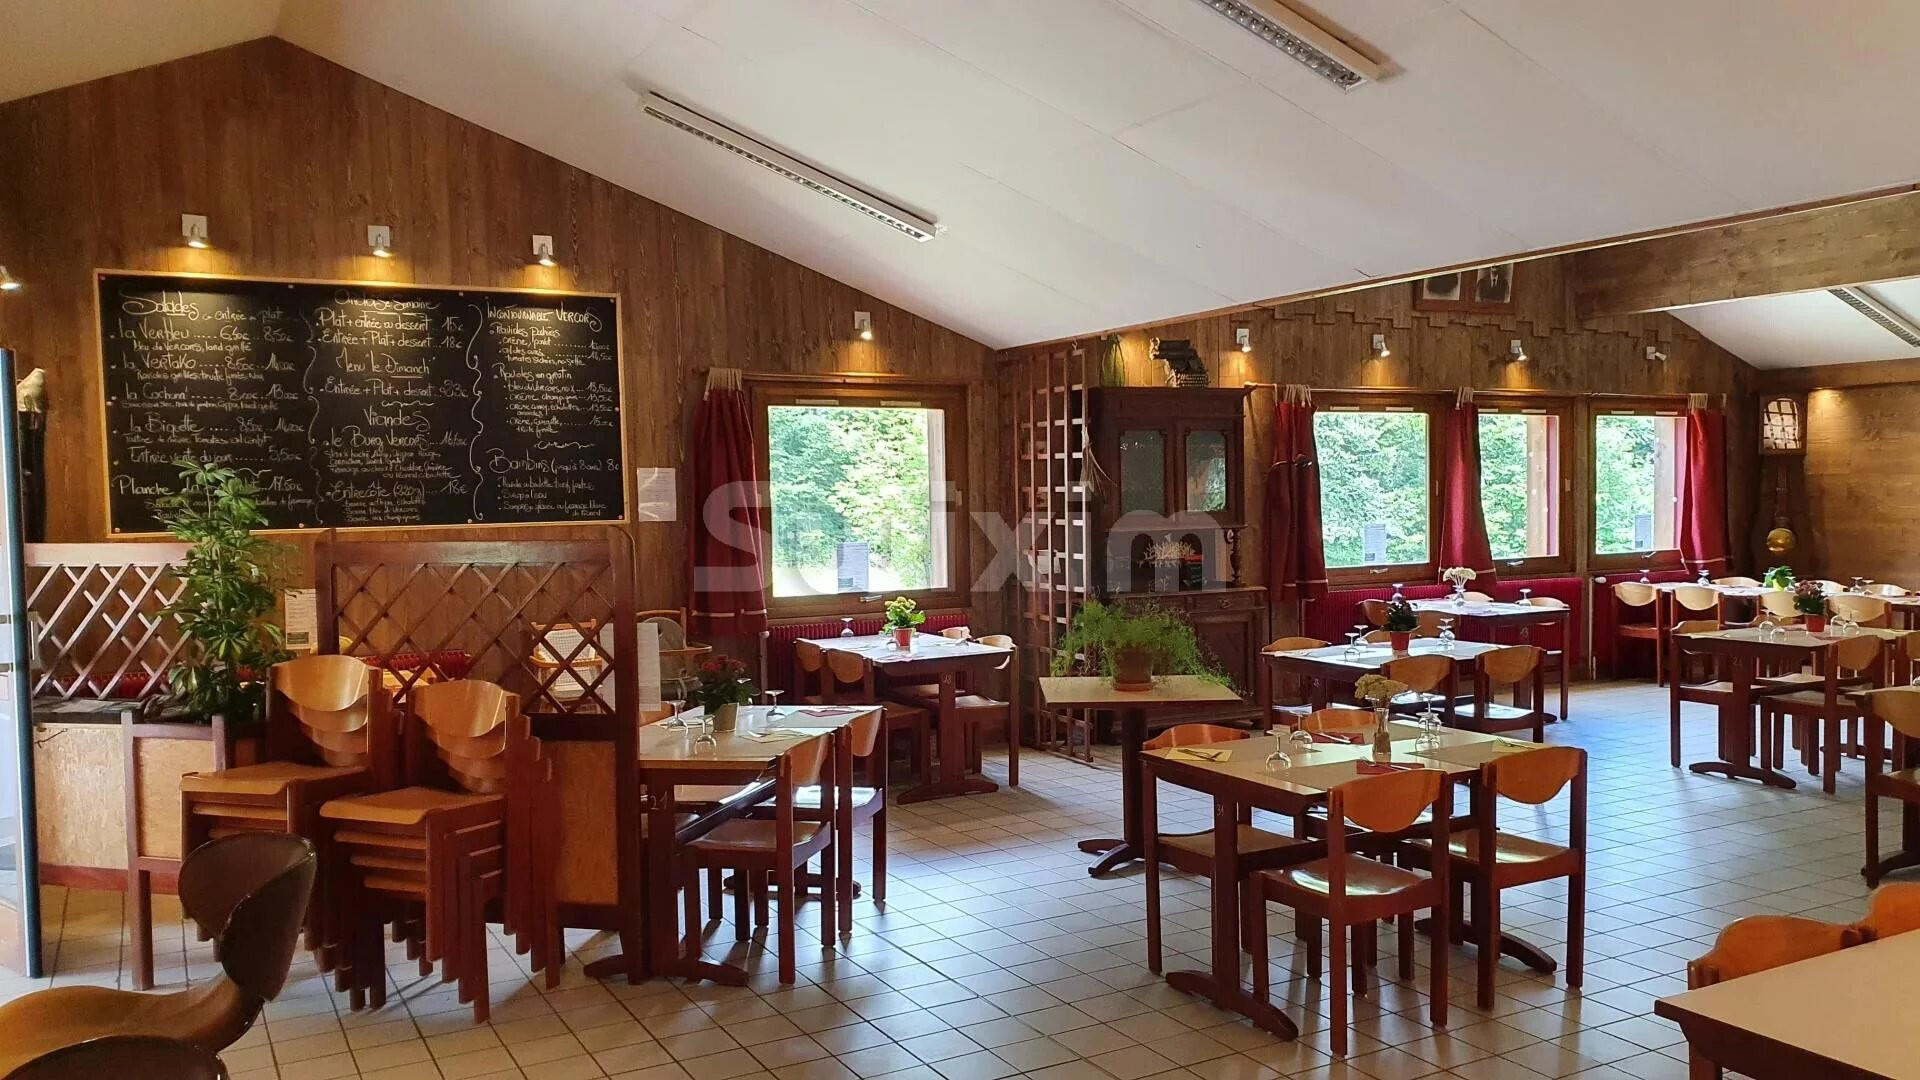 Vente restaurant bar location de ski à Léoncel